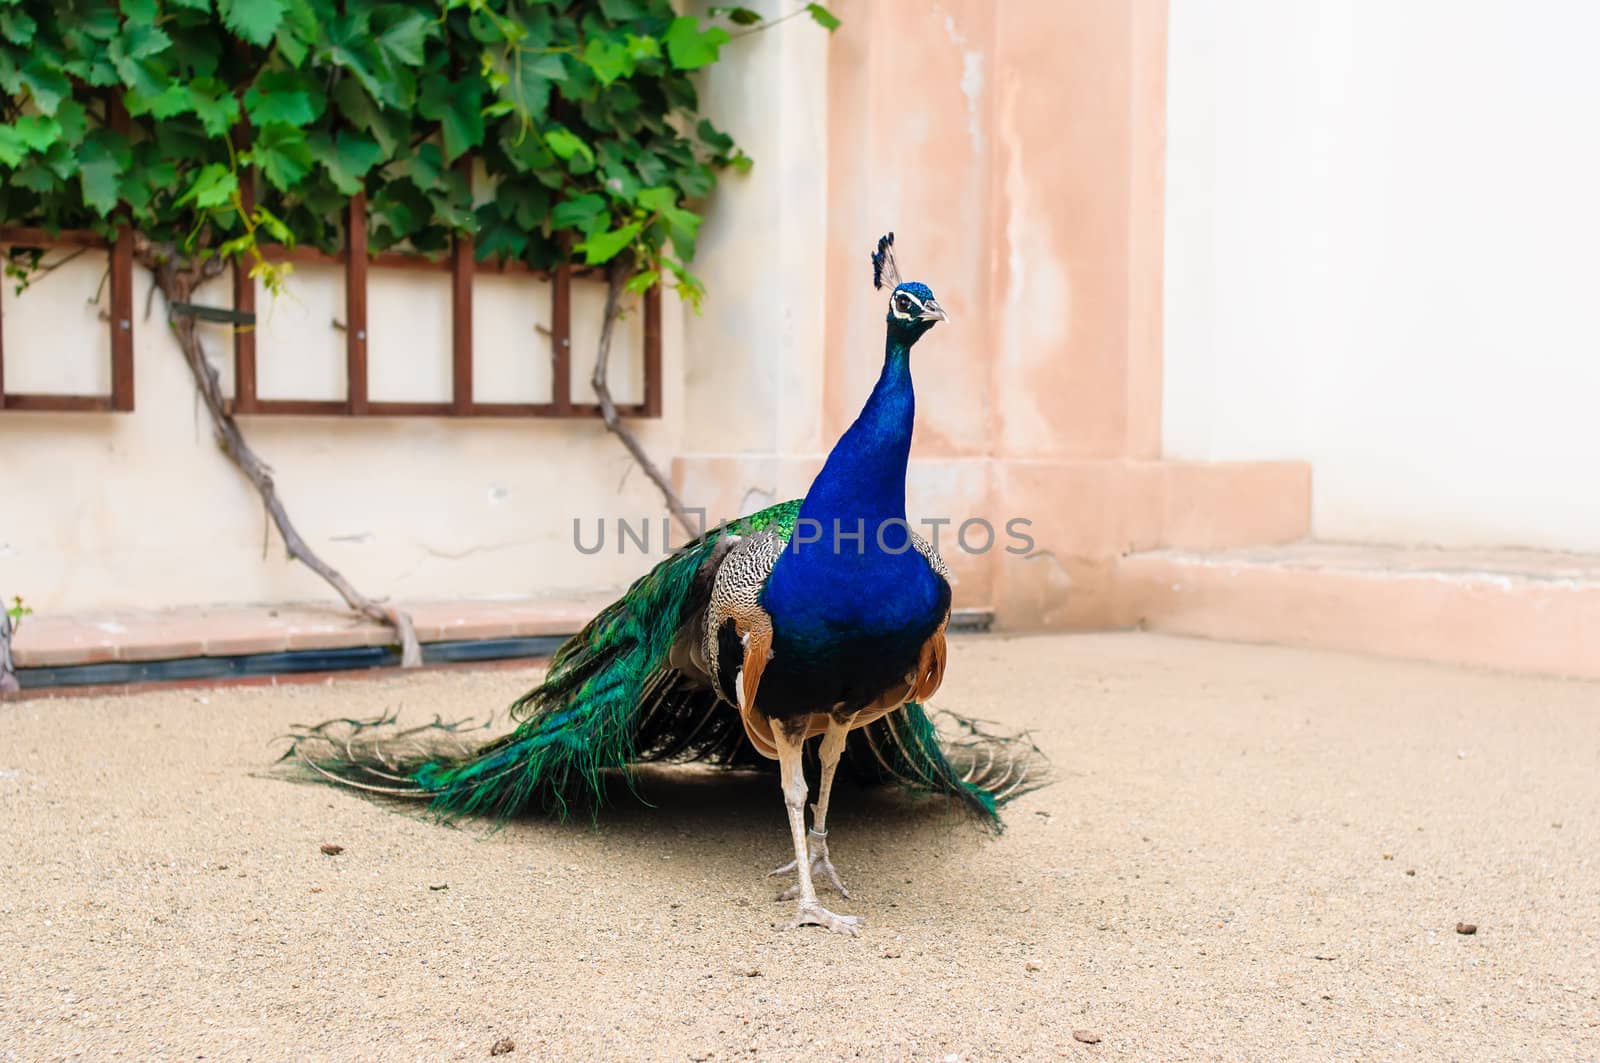 Full view of peacock 